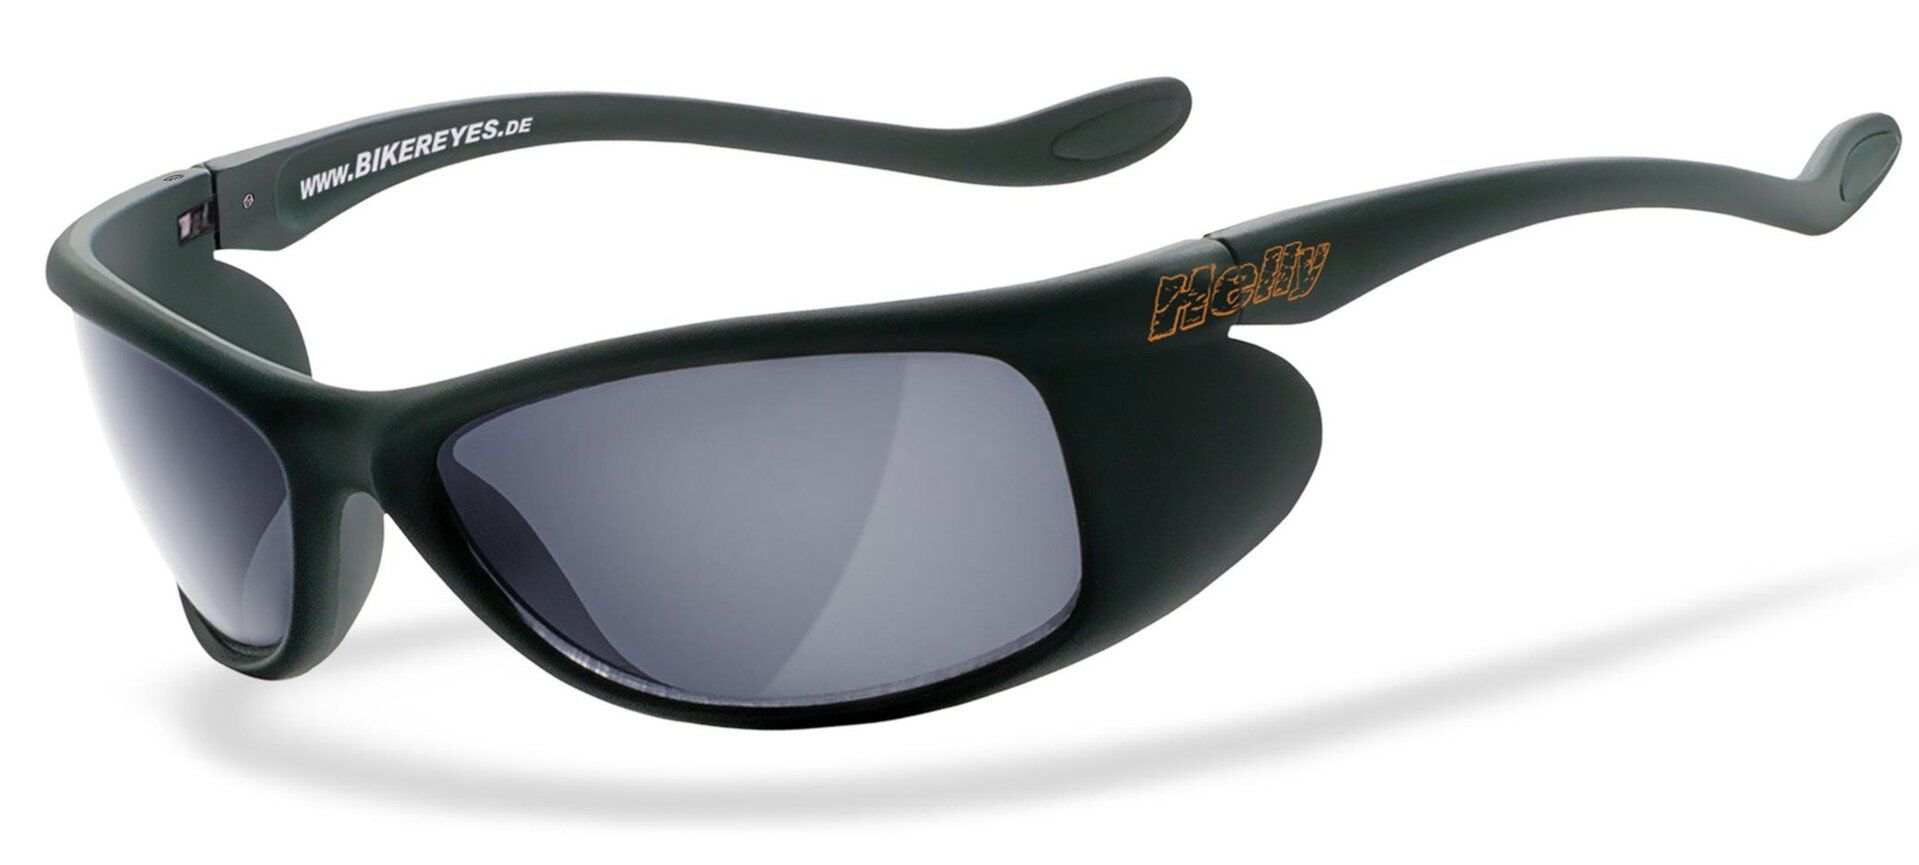 Helly Bikereyes Top Speed 4 Gafas de sol - Negro (un tamaño)